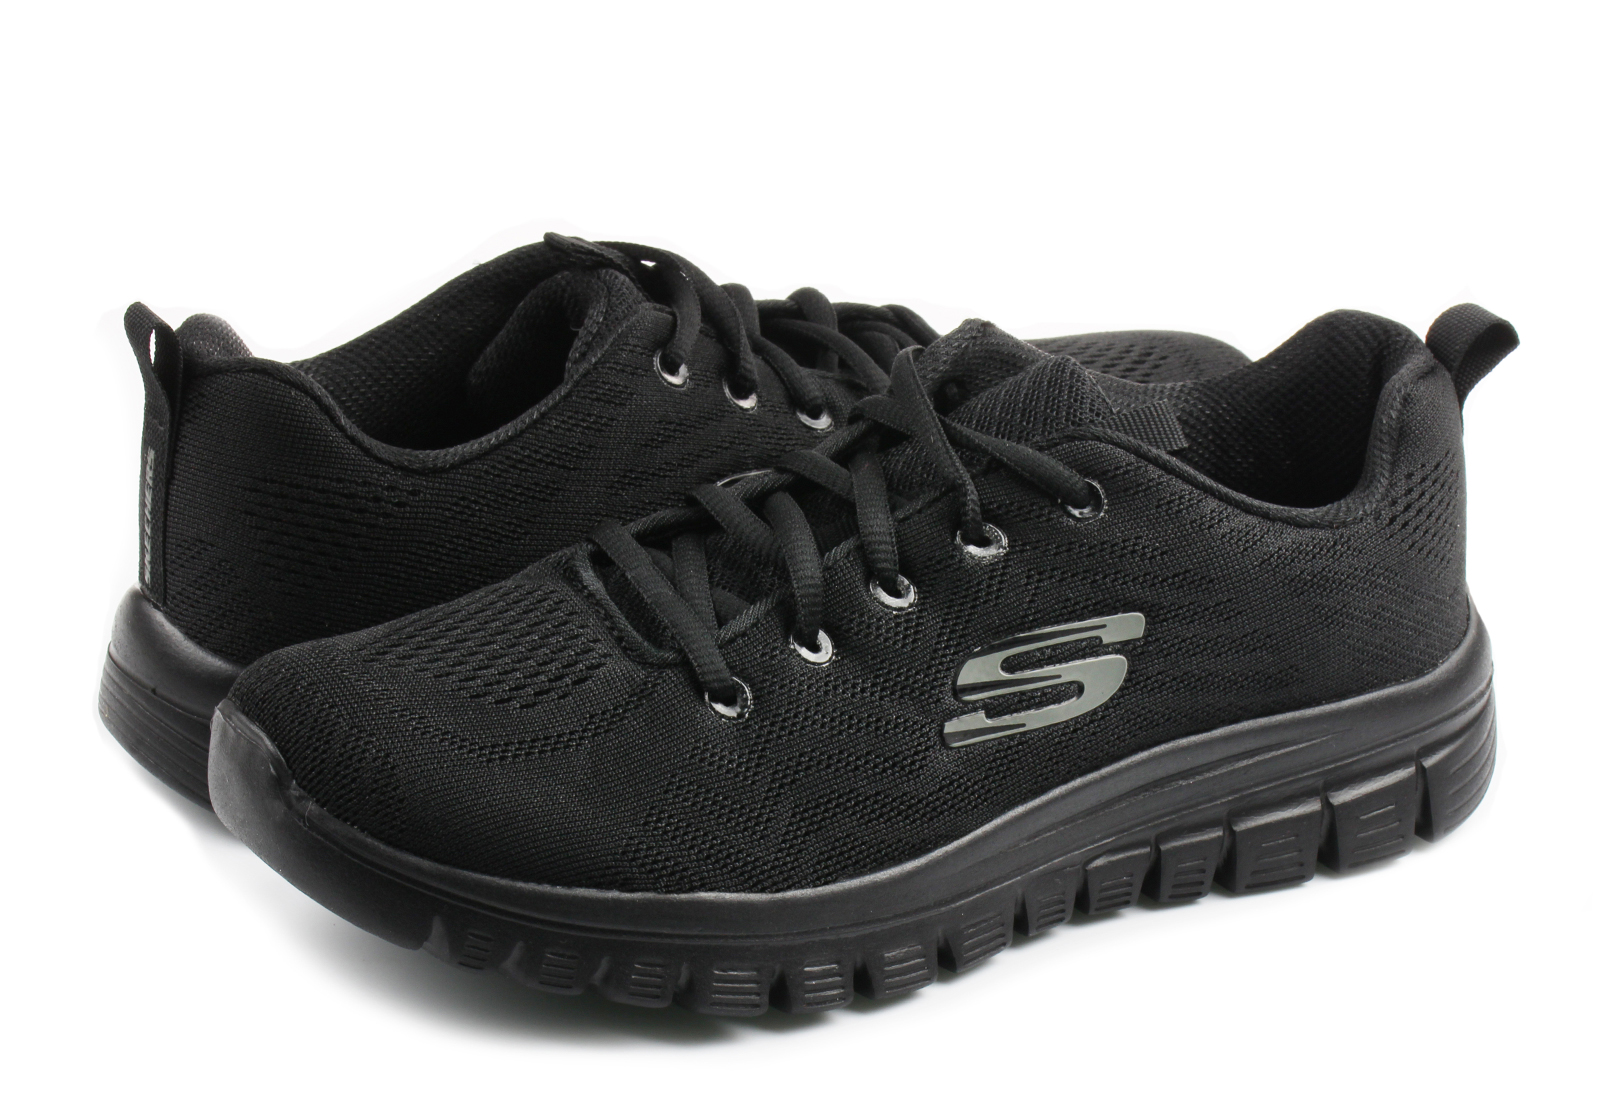 Skechers Shoes - Graceful - Get Connected - 12615-bbk - Online shop for sneakers ...1600 x 1100